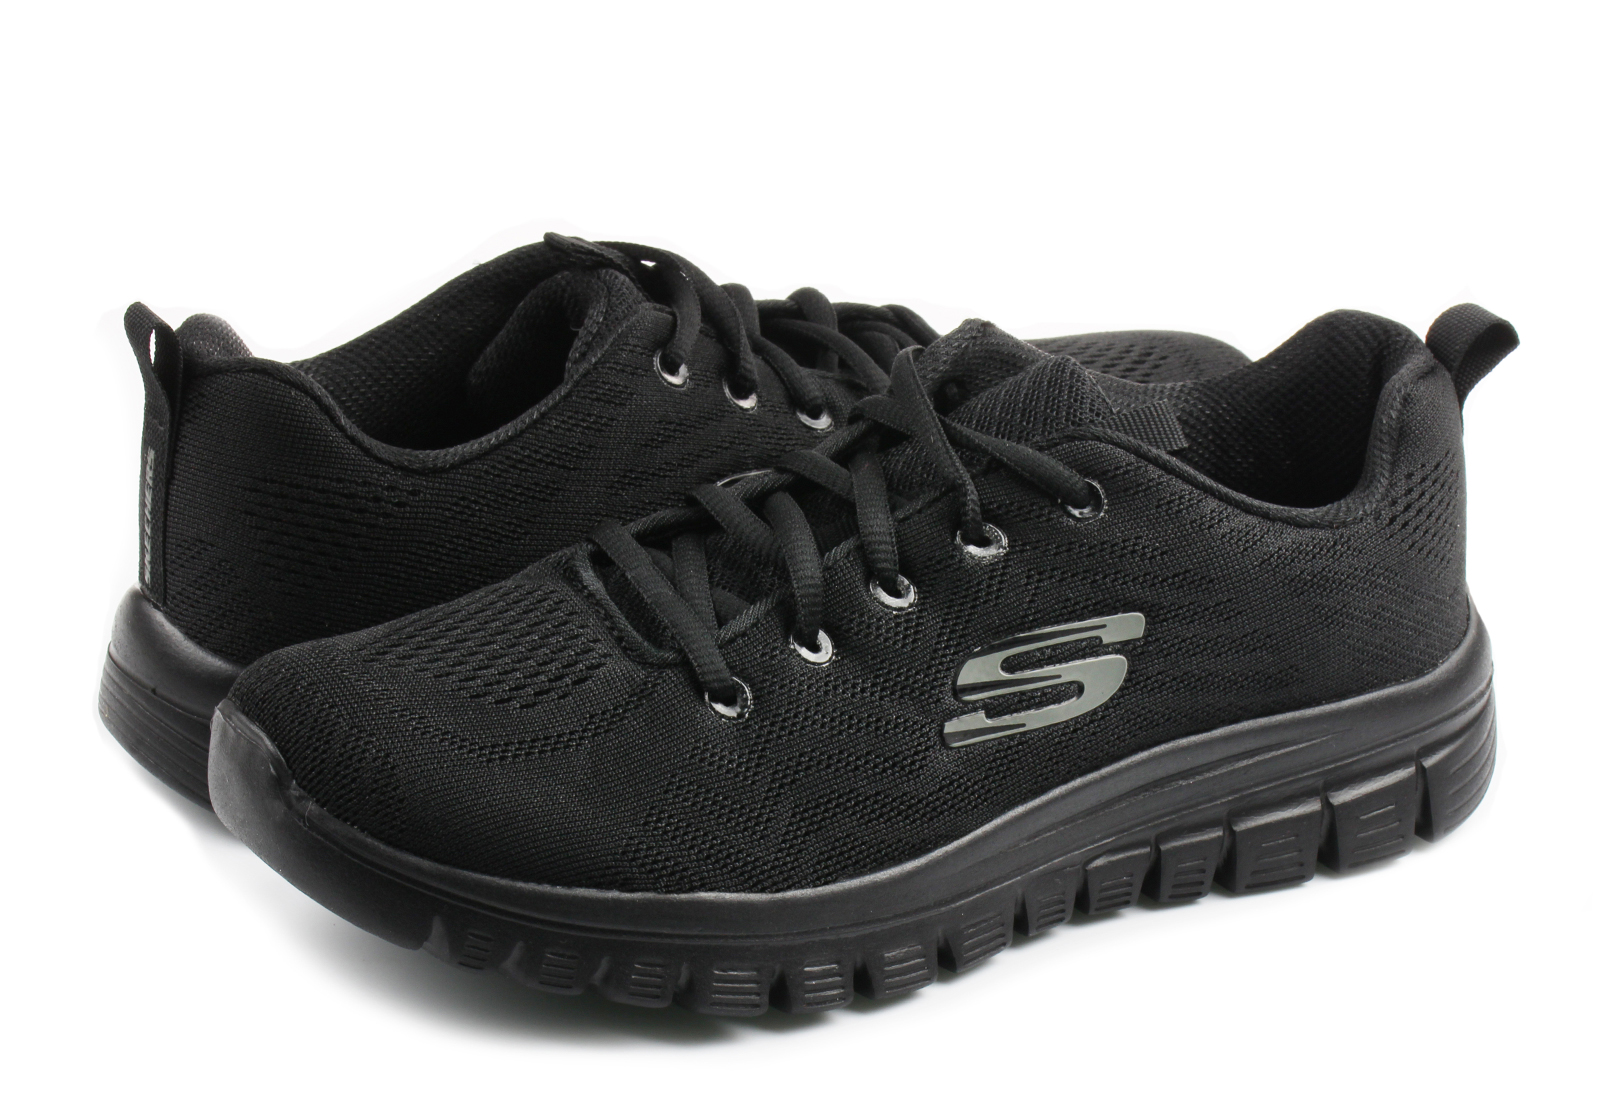 Skechers Shoes - Graceful - Get Connected - 12615-bbk - Online shop for sneakers ...1600 x 1100